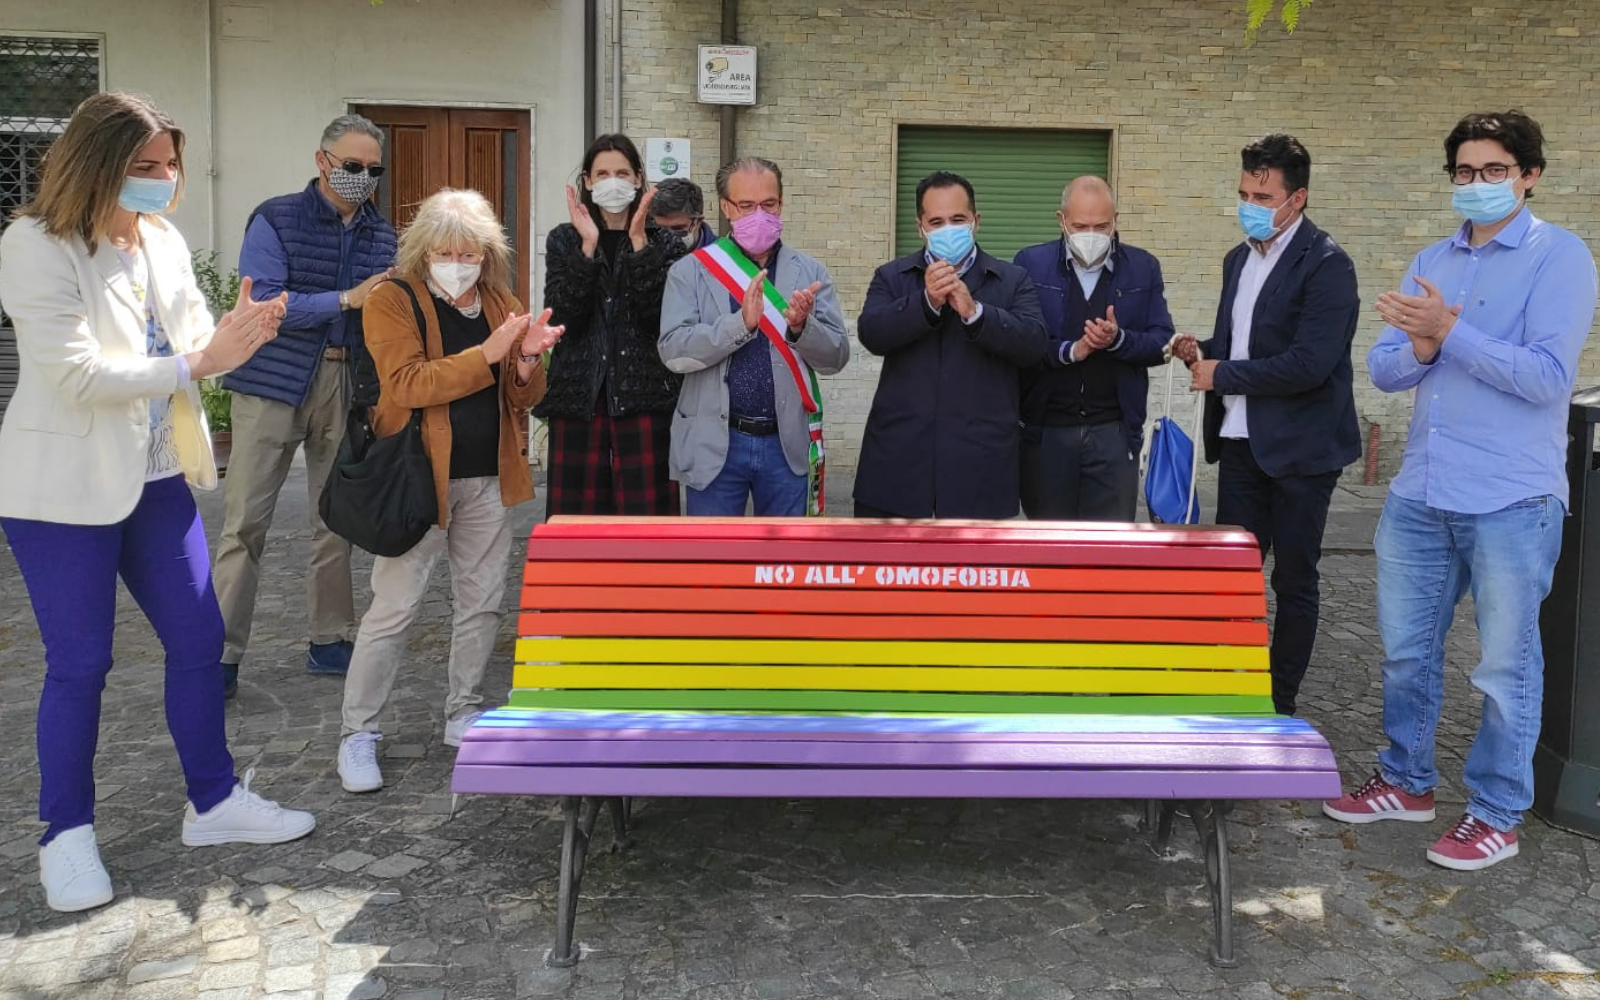 Inauguration of the rainbow bench in Quarrata